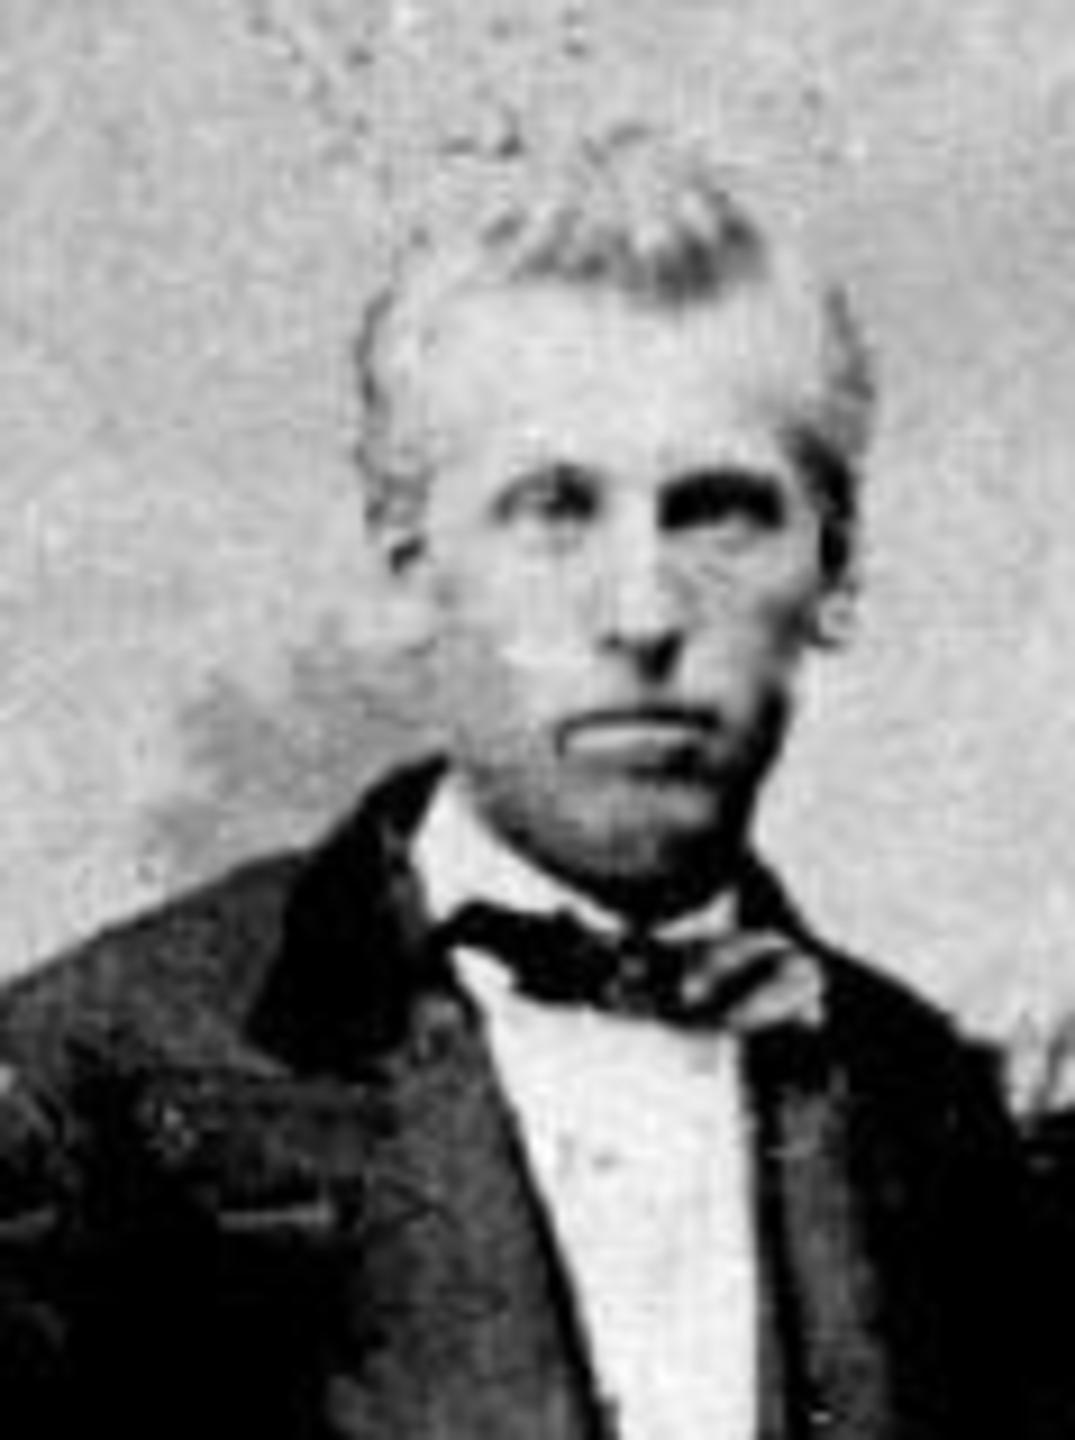 John Niels Beckstrom (1851 - 1928) Profile